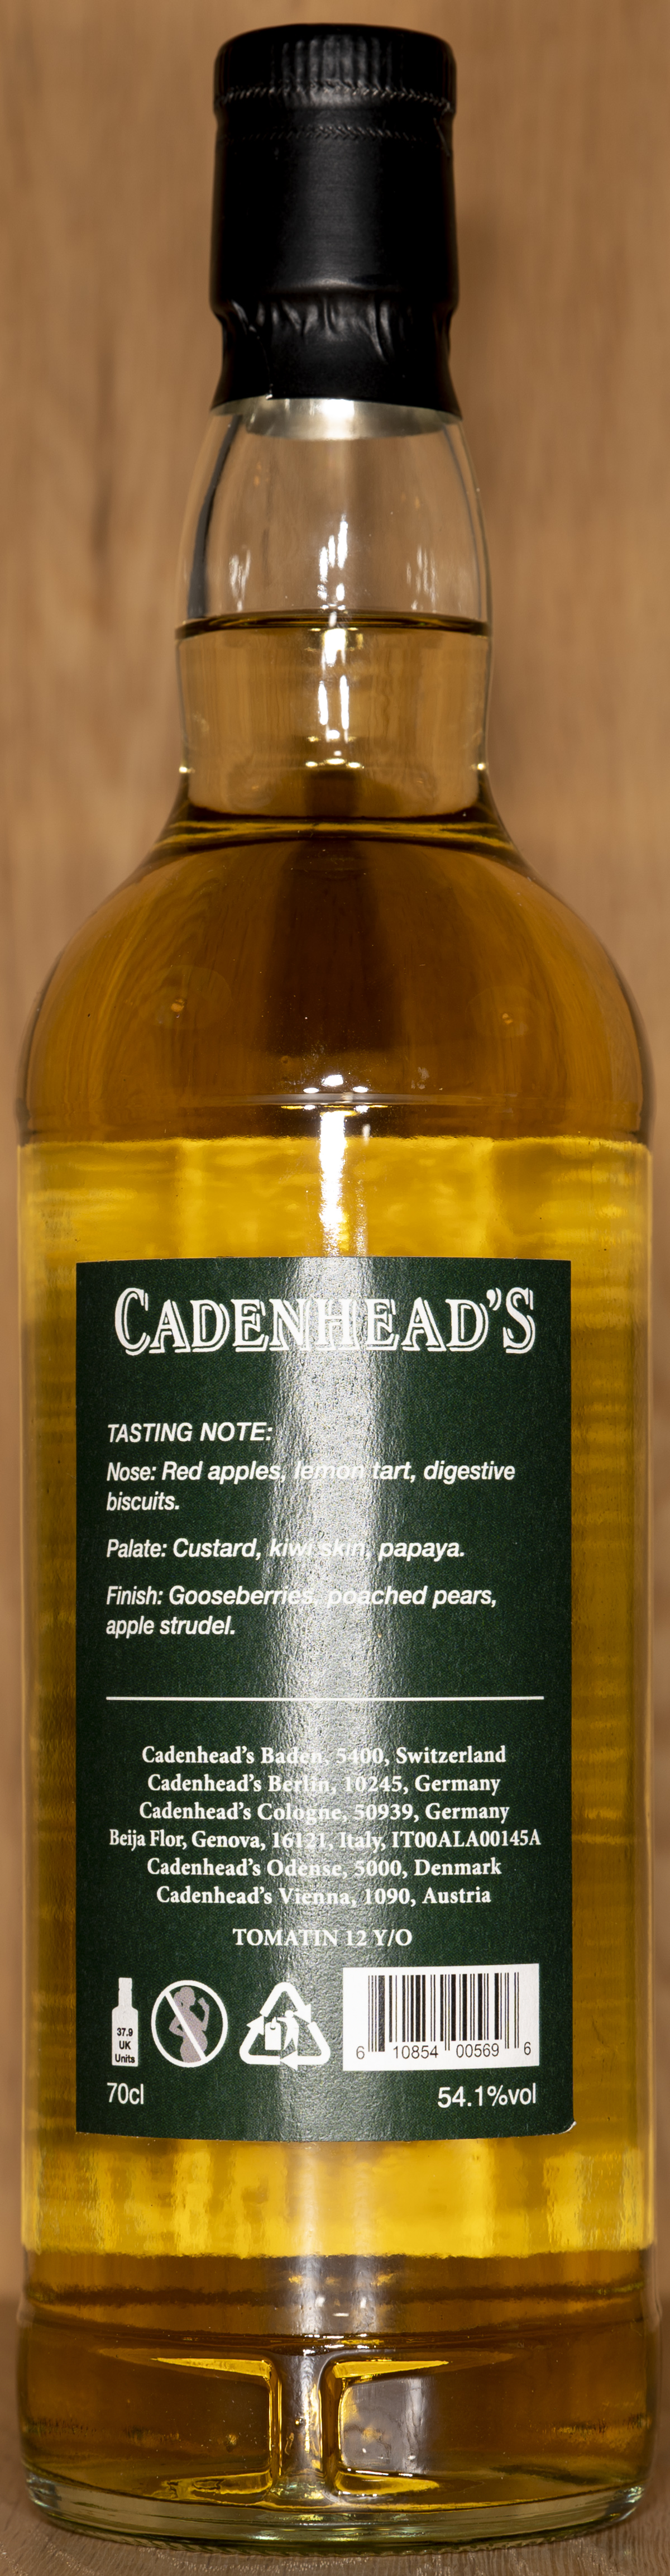 Billede: DSC_5007 - Cadenheads Authentic Collection Tomatin 12 - bottle back.jpg